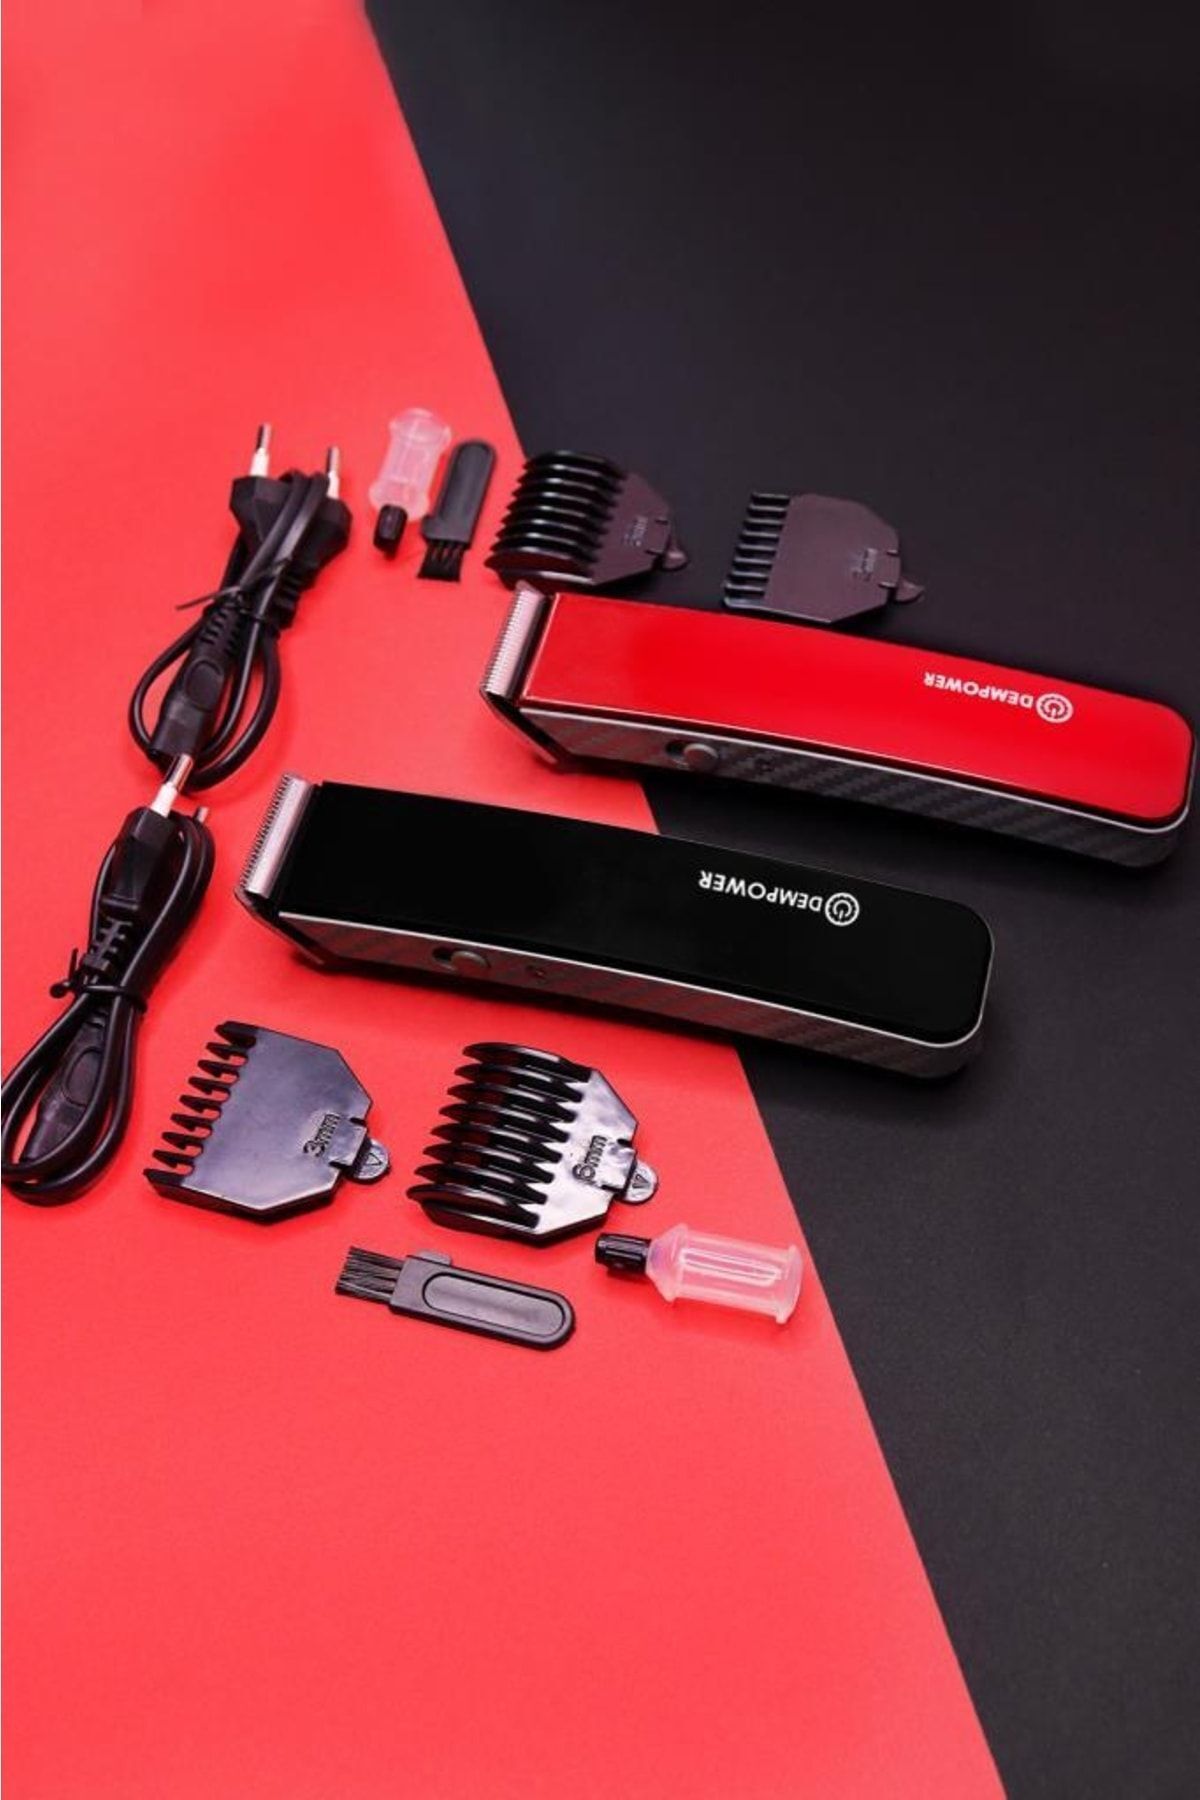 We Trend 2'li Set Dp-02 Saç-sakal Tıraş Makinesi Kırmızı + Dp-02 Saç-sakal Tıraş Makinesi Siyah